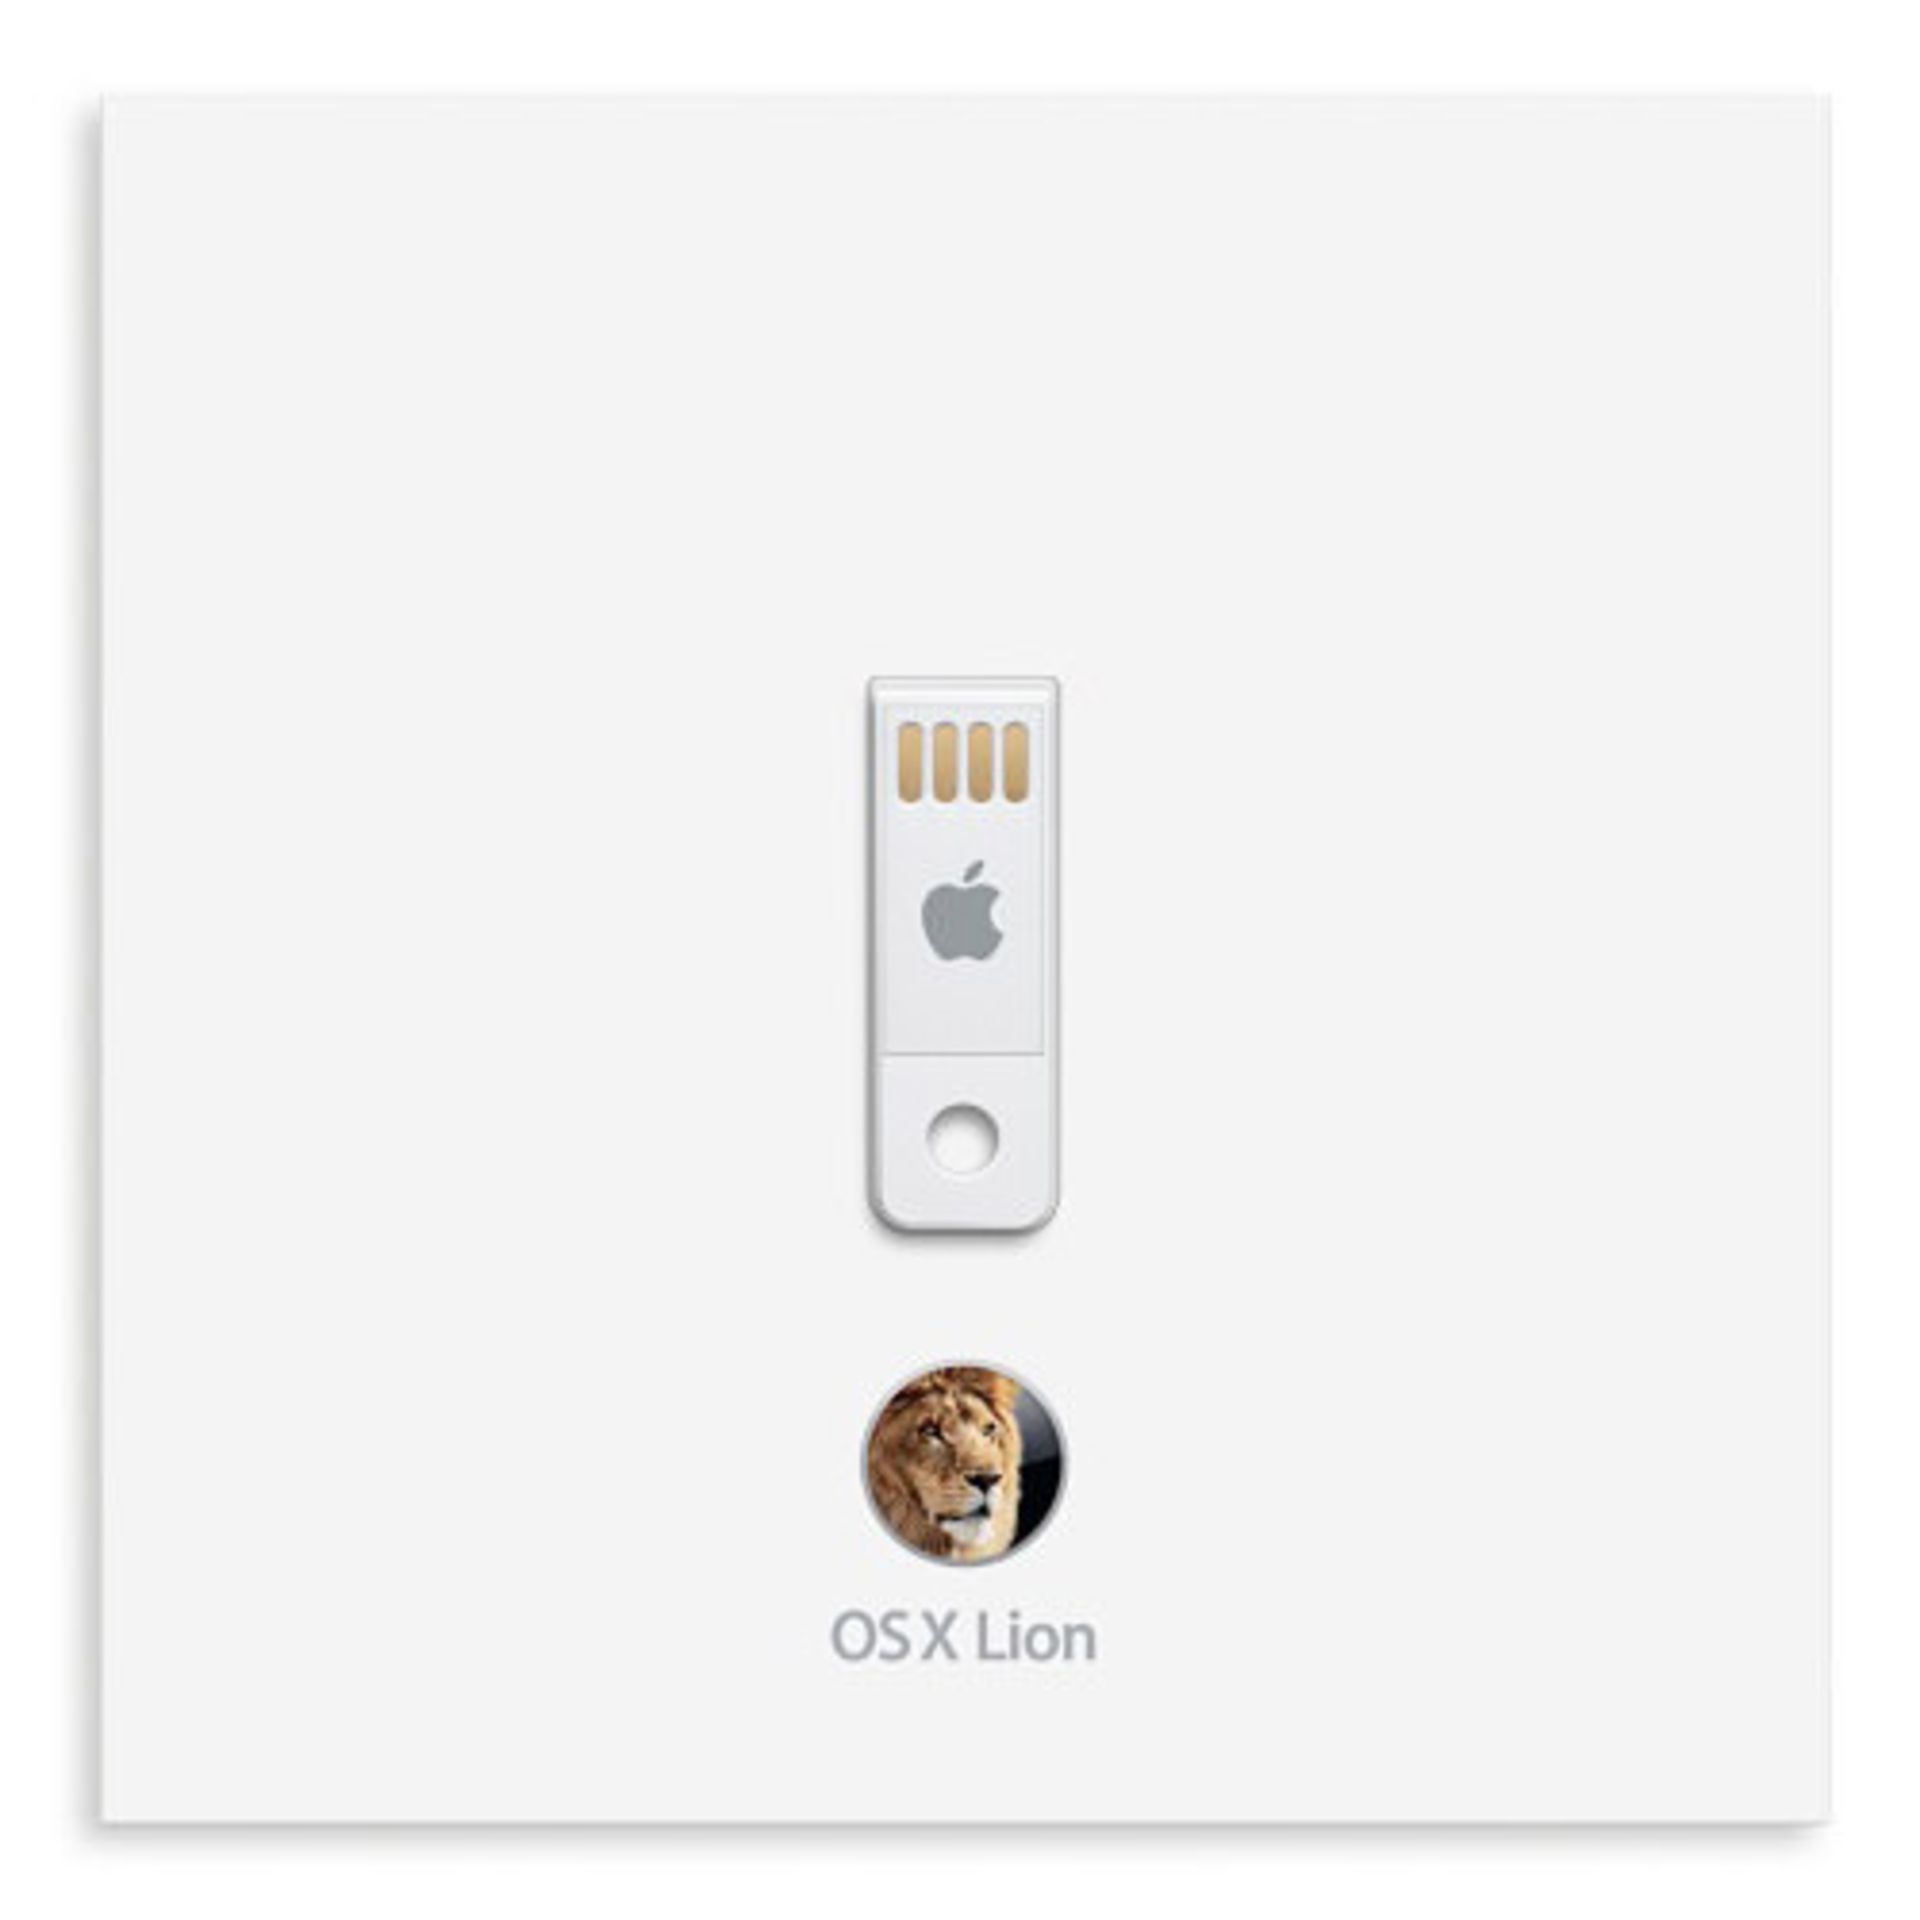 مرجع متخصصين ايران فلش مك او اس لاين Mac OS X Lion USB Flash thumb drive